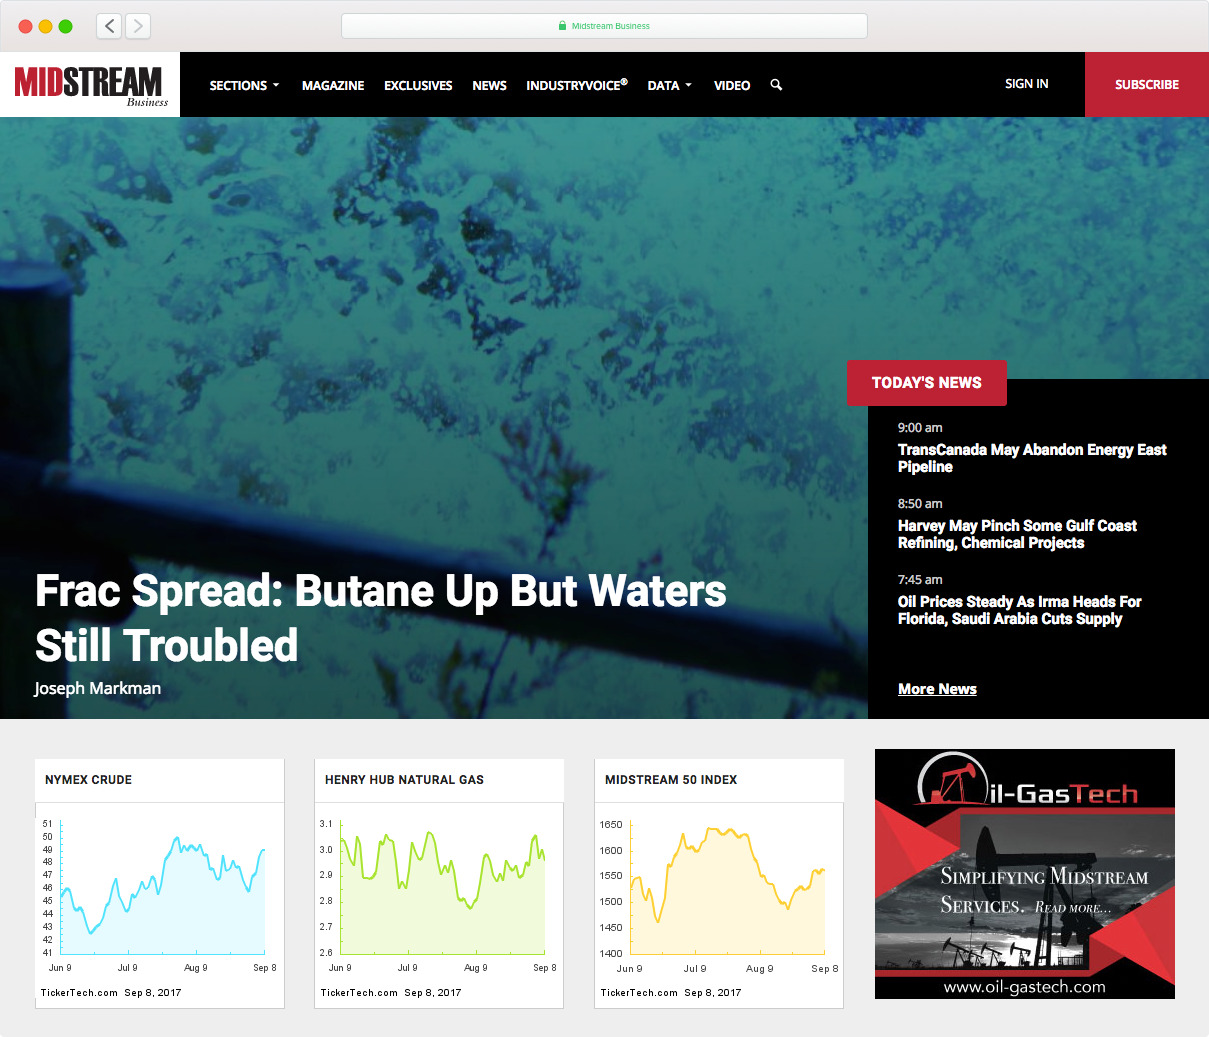 Midstream Business Website